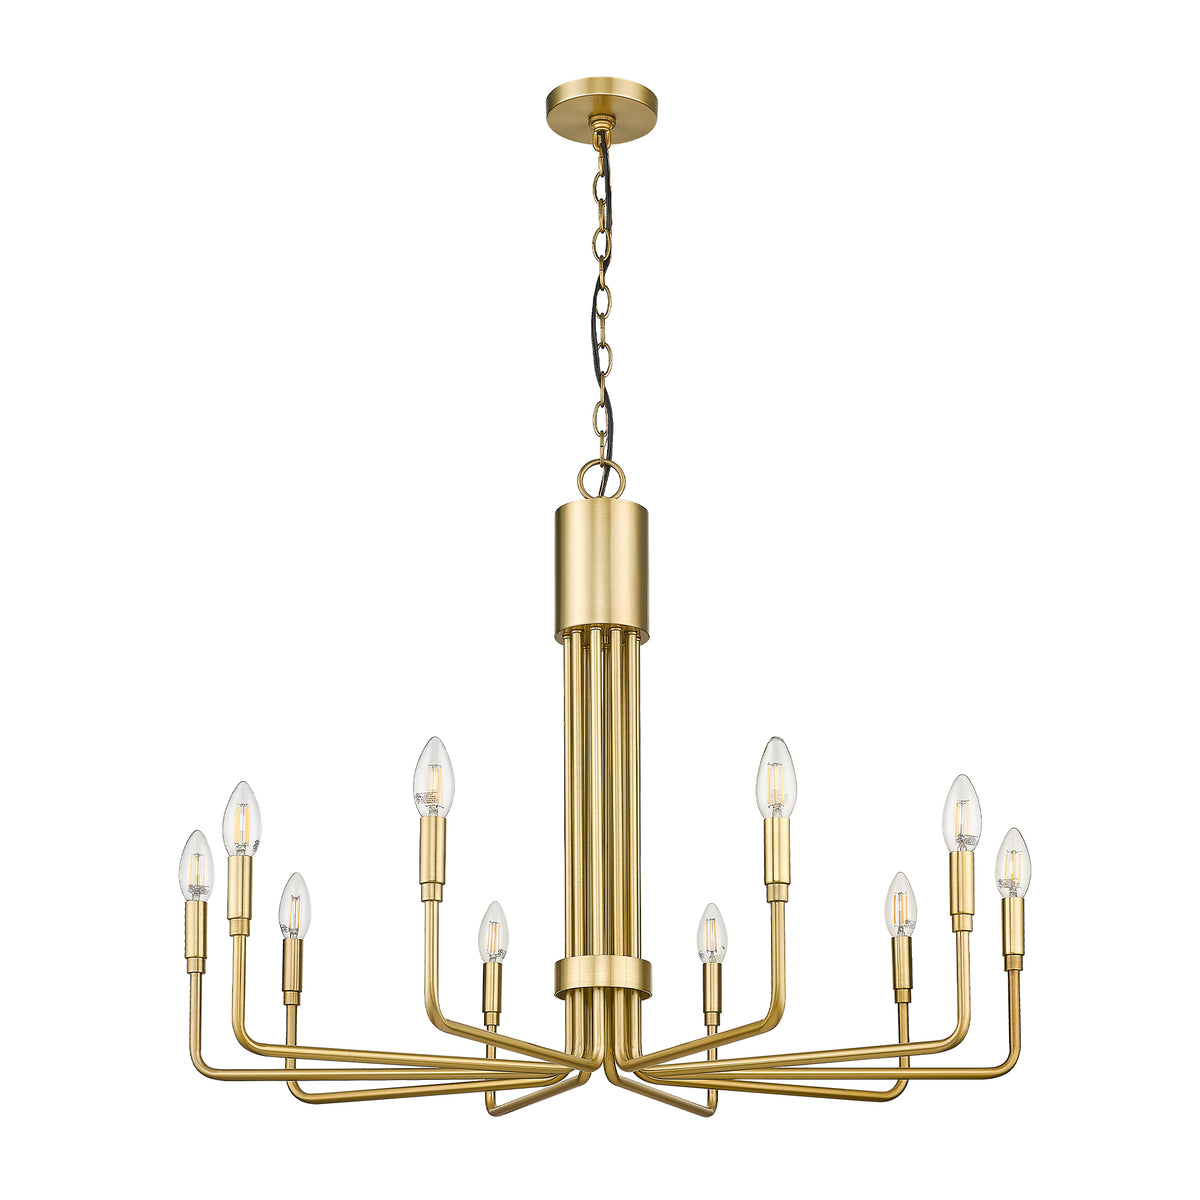 10-light gold modern candle style chandelier - Vivio Lighting